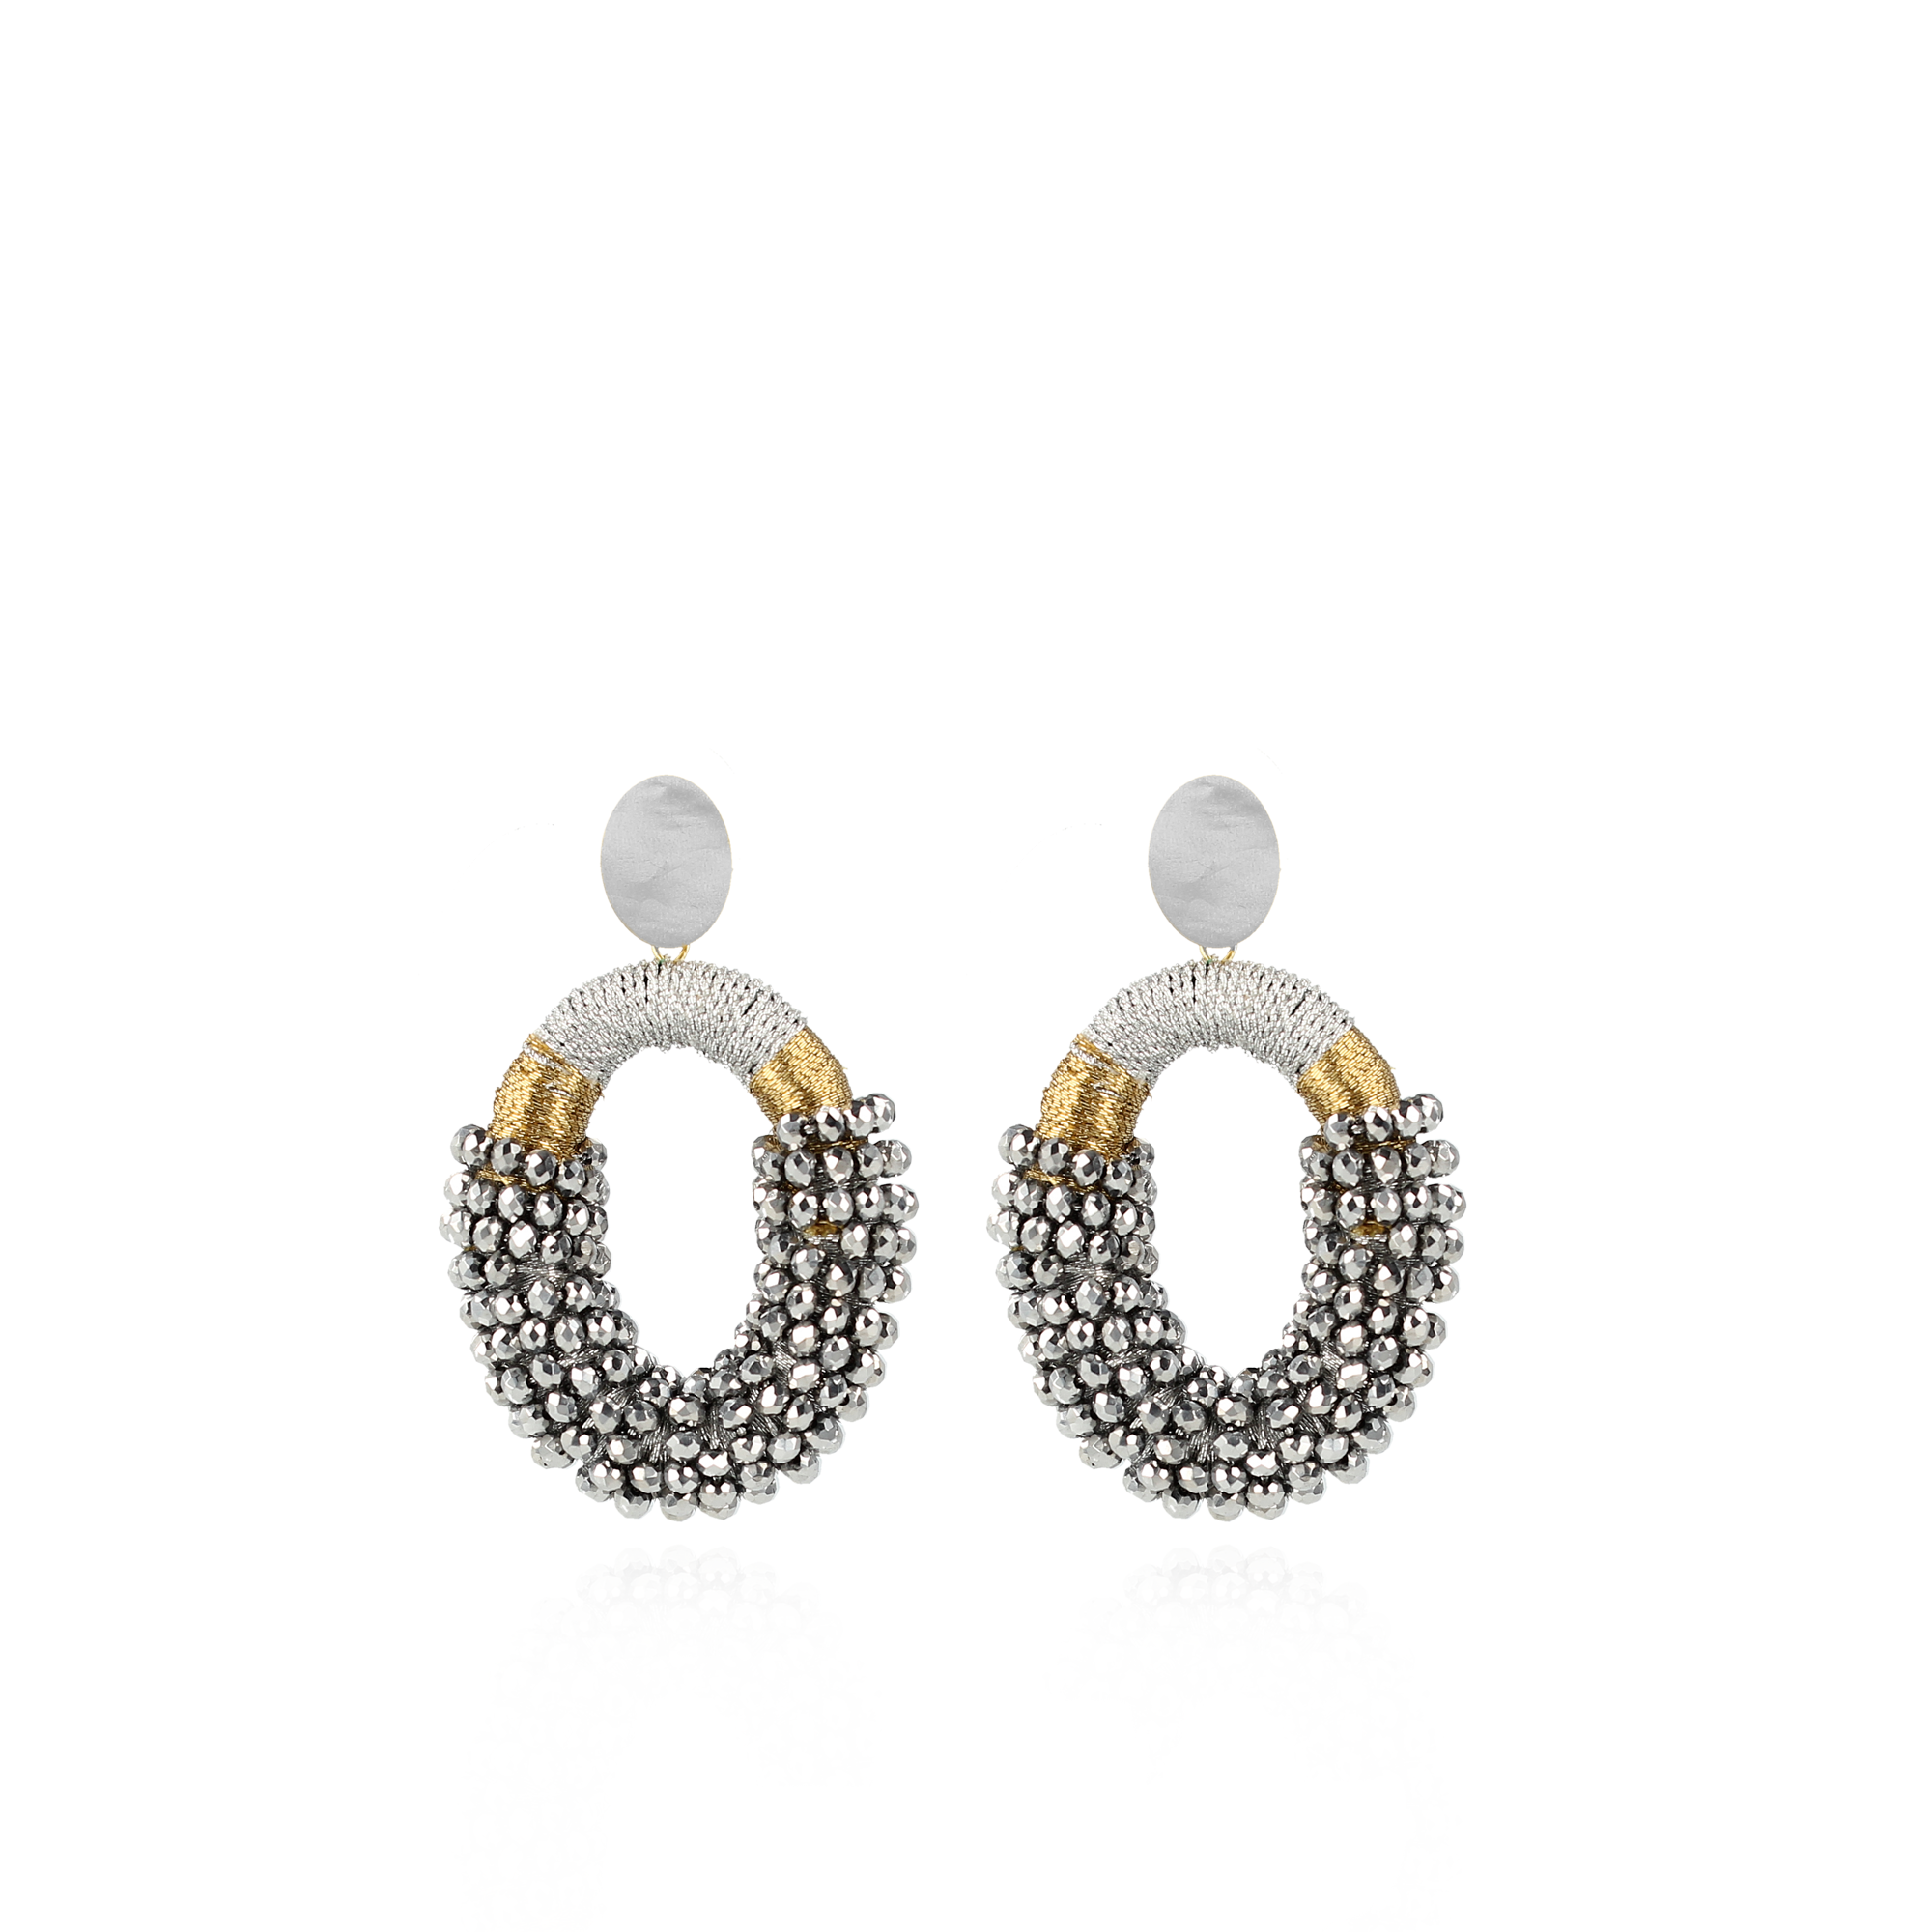 Silver earrings yara oval M lott-theme.productDescriptionPage.SEO.byTheBrand